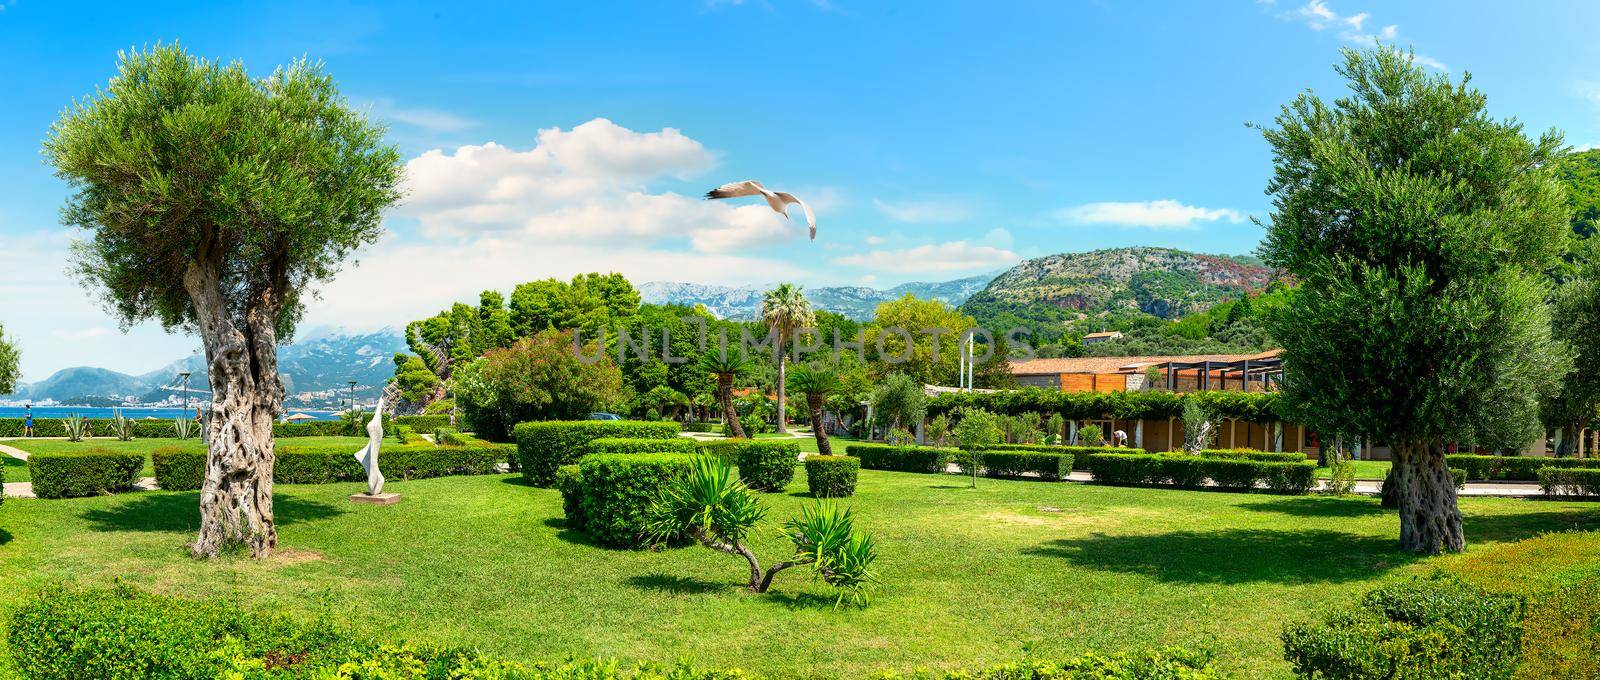 Park near Sveti Stefan by Givaga